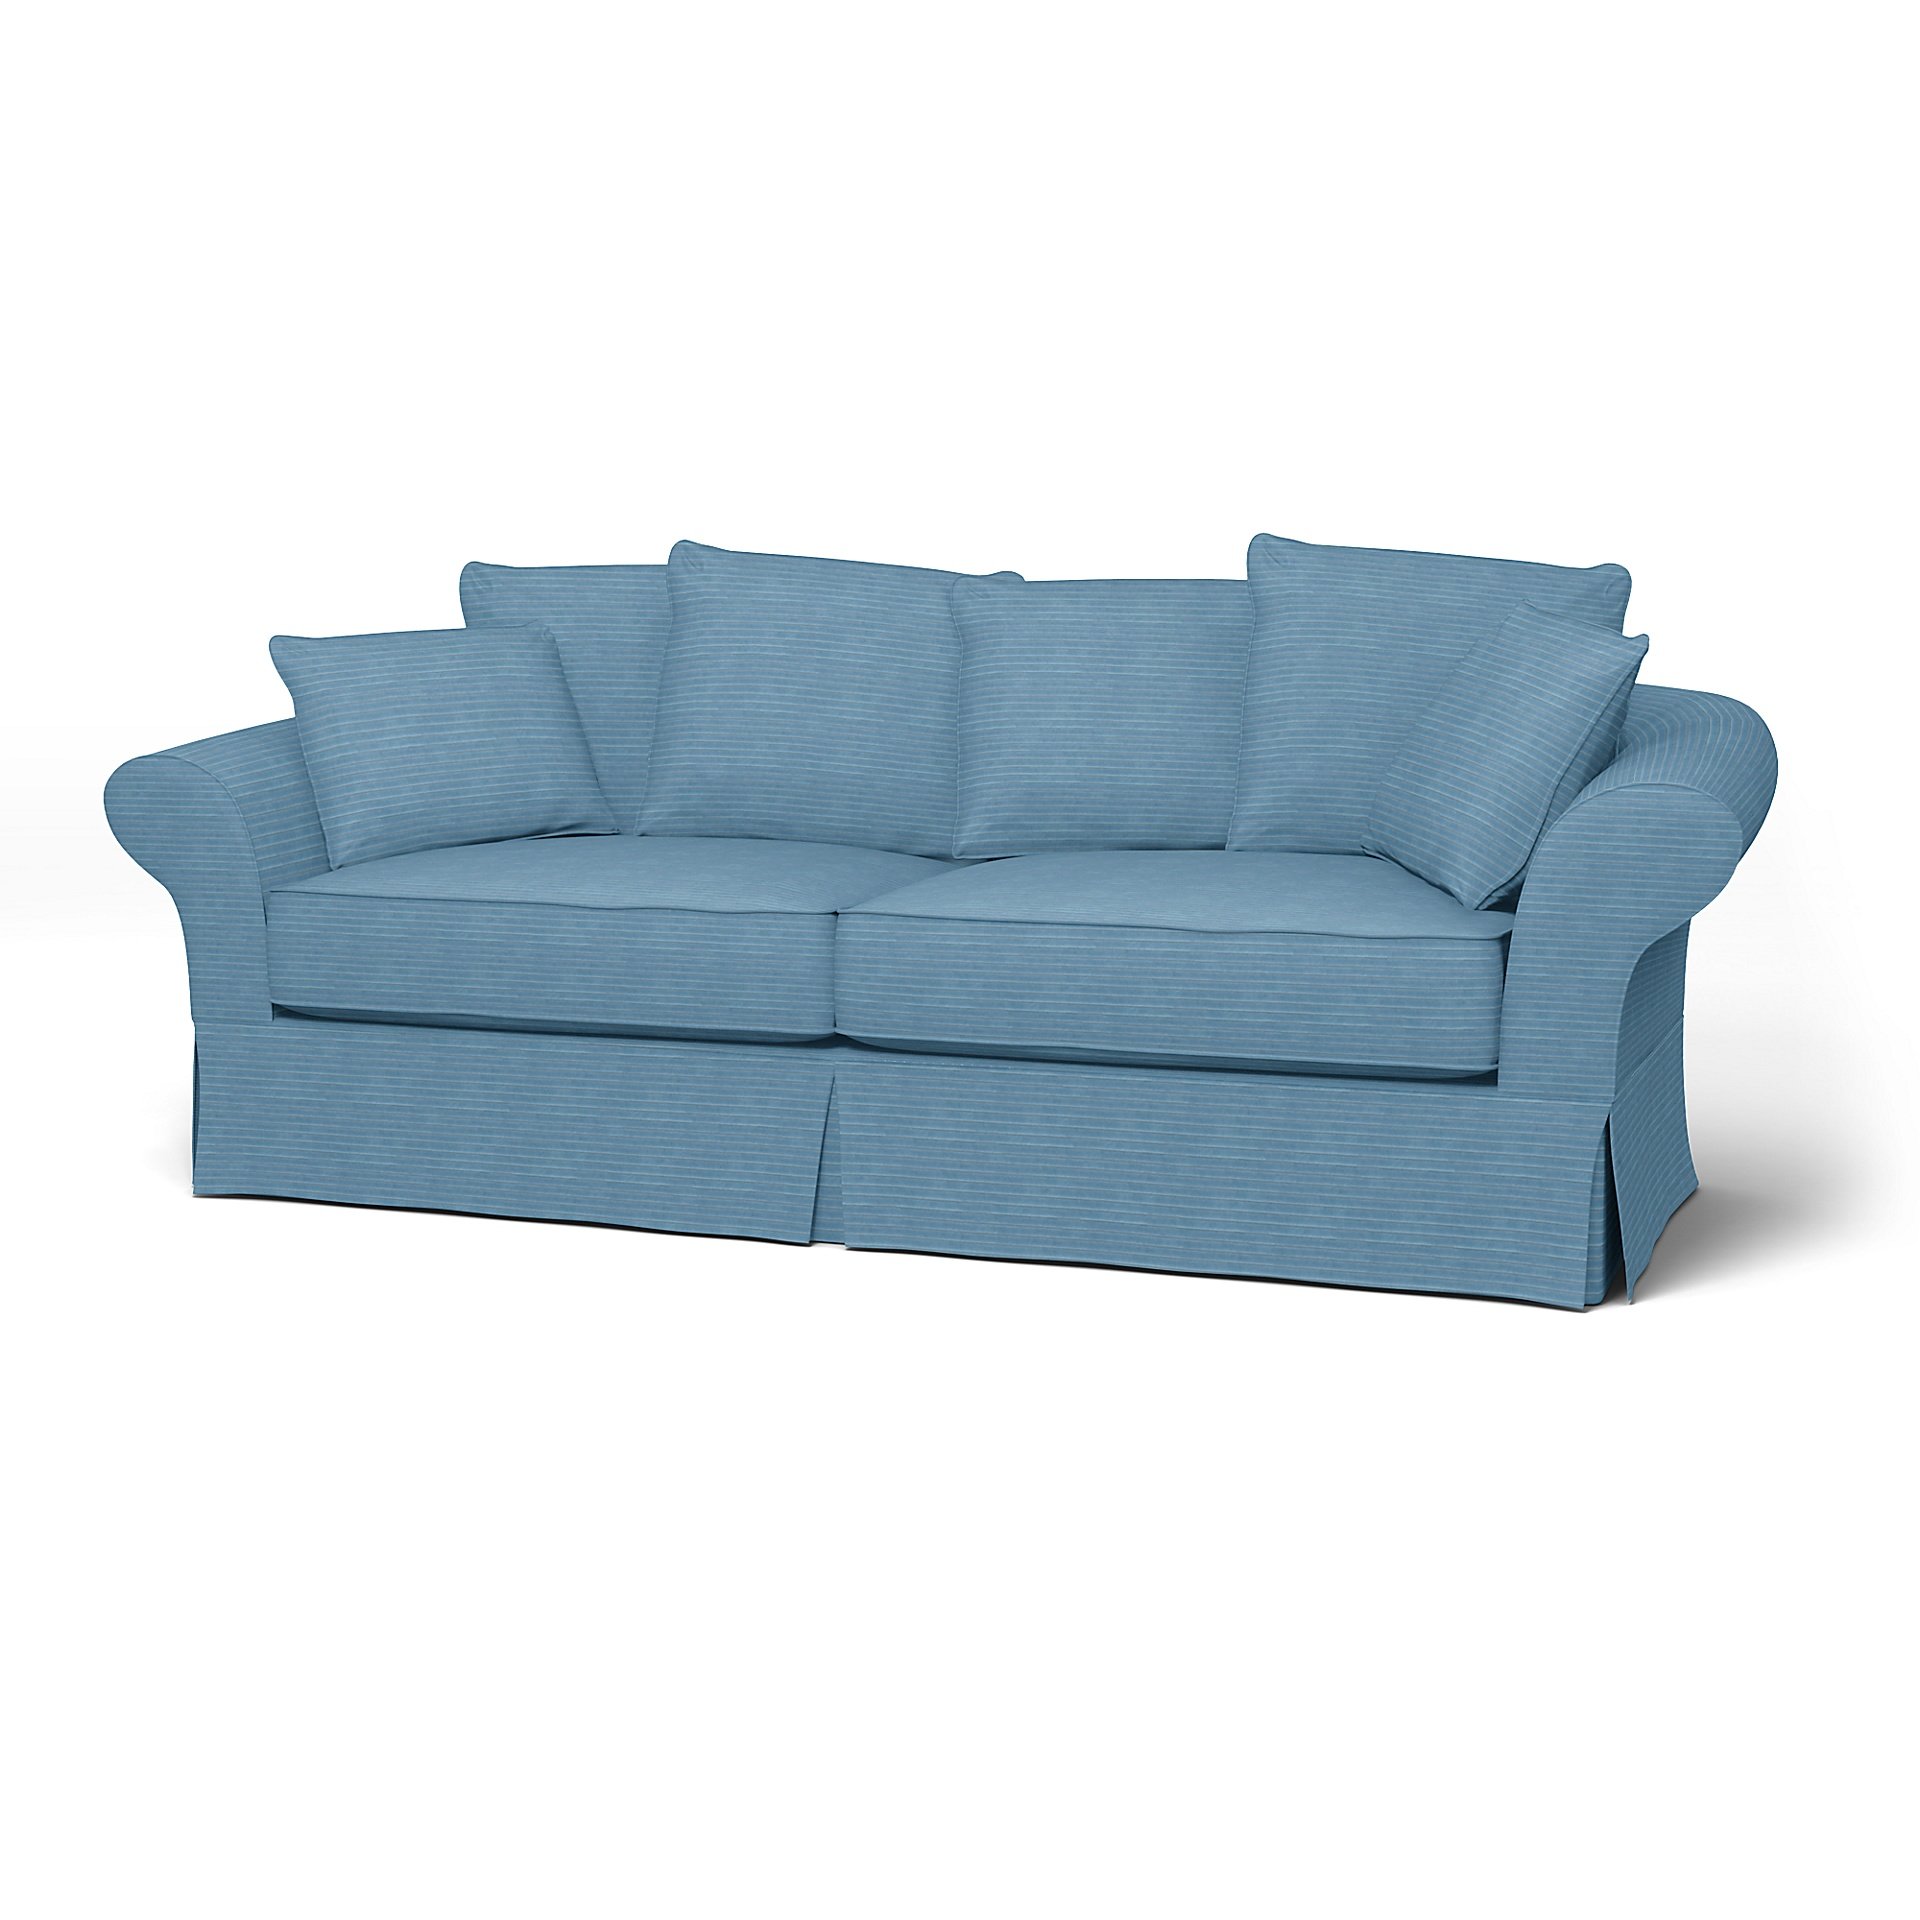 IKEA - Backamo 3 Seater Sofa Cover, Sky Blue, Corduroy - Bemz